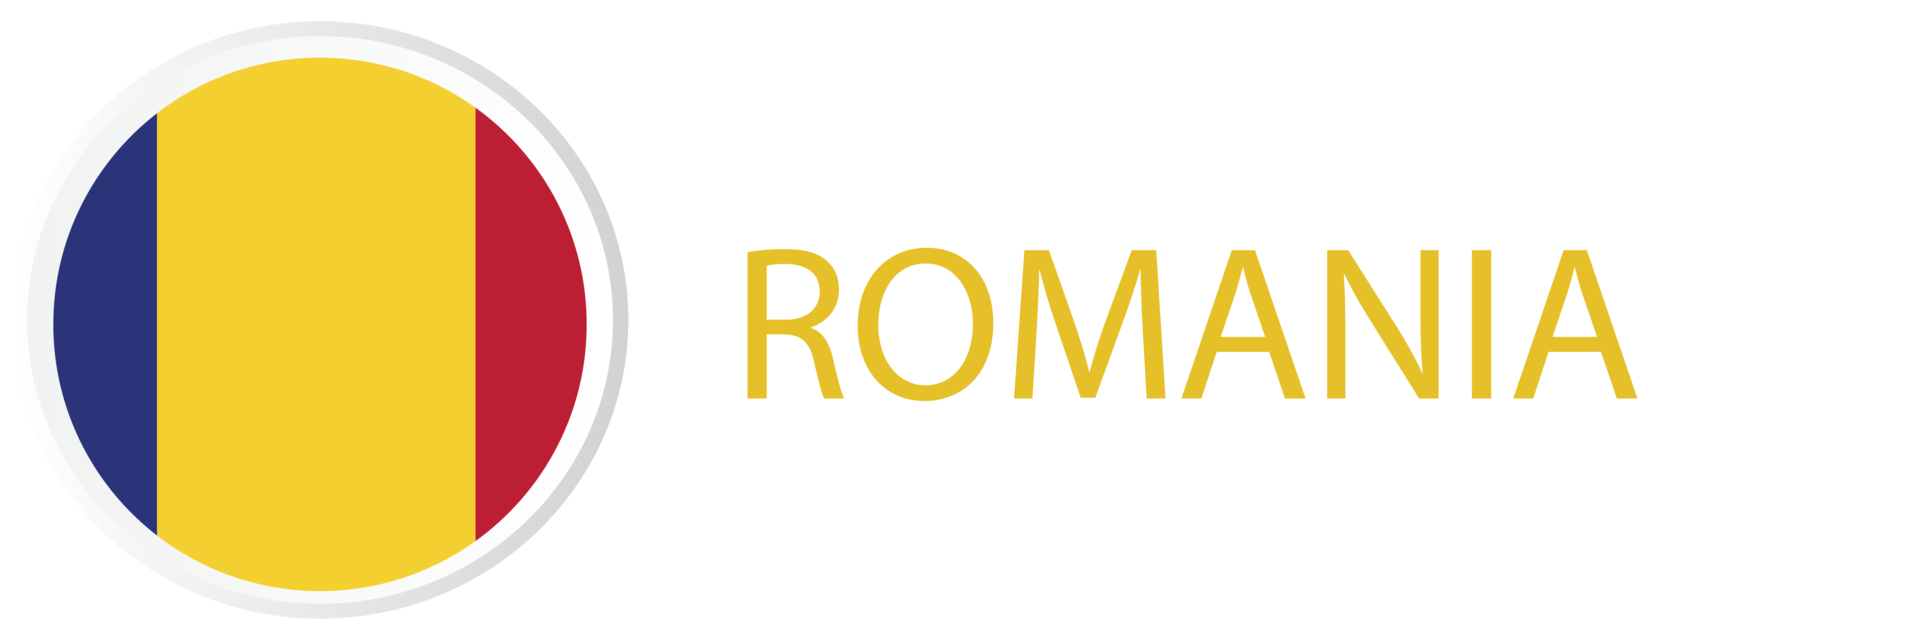 Romania flag in web button, button icon. 27375953 PNG